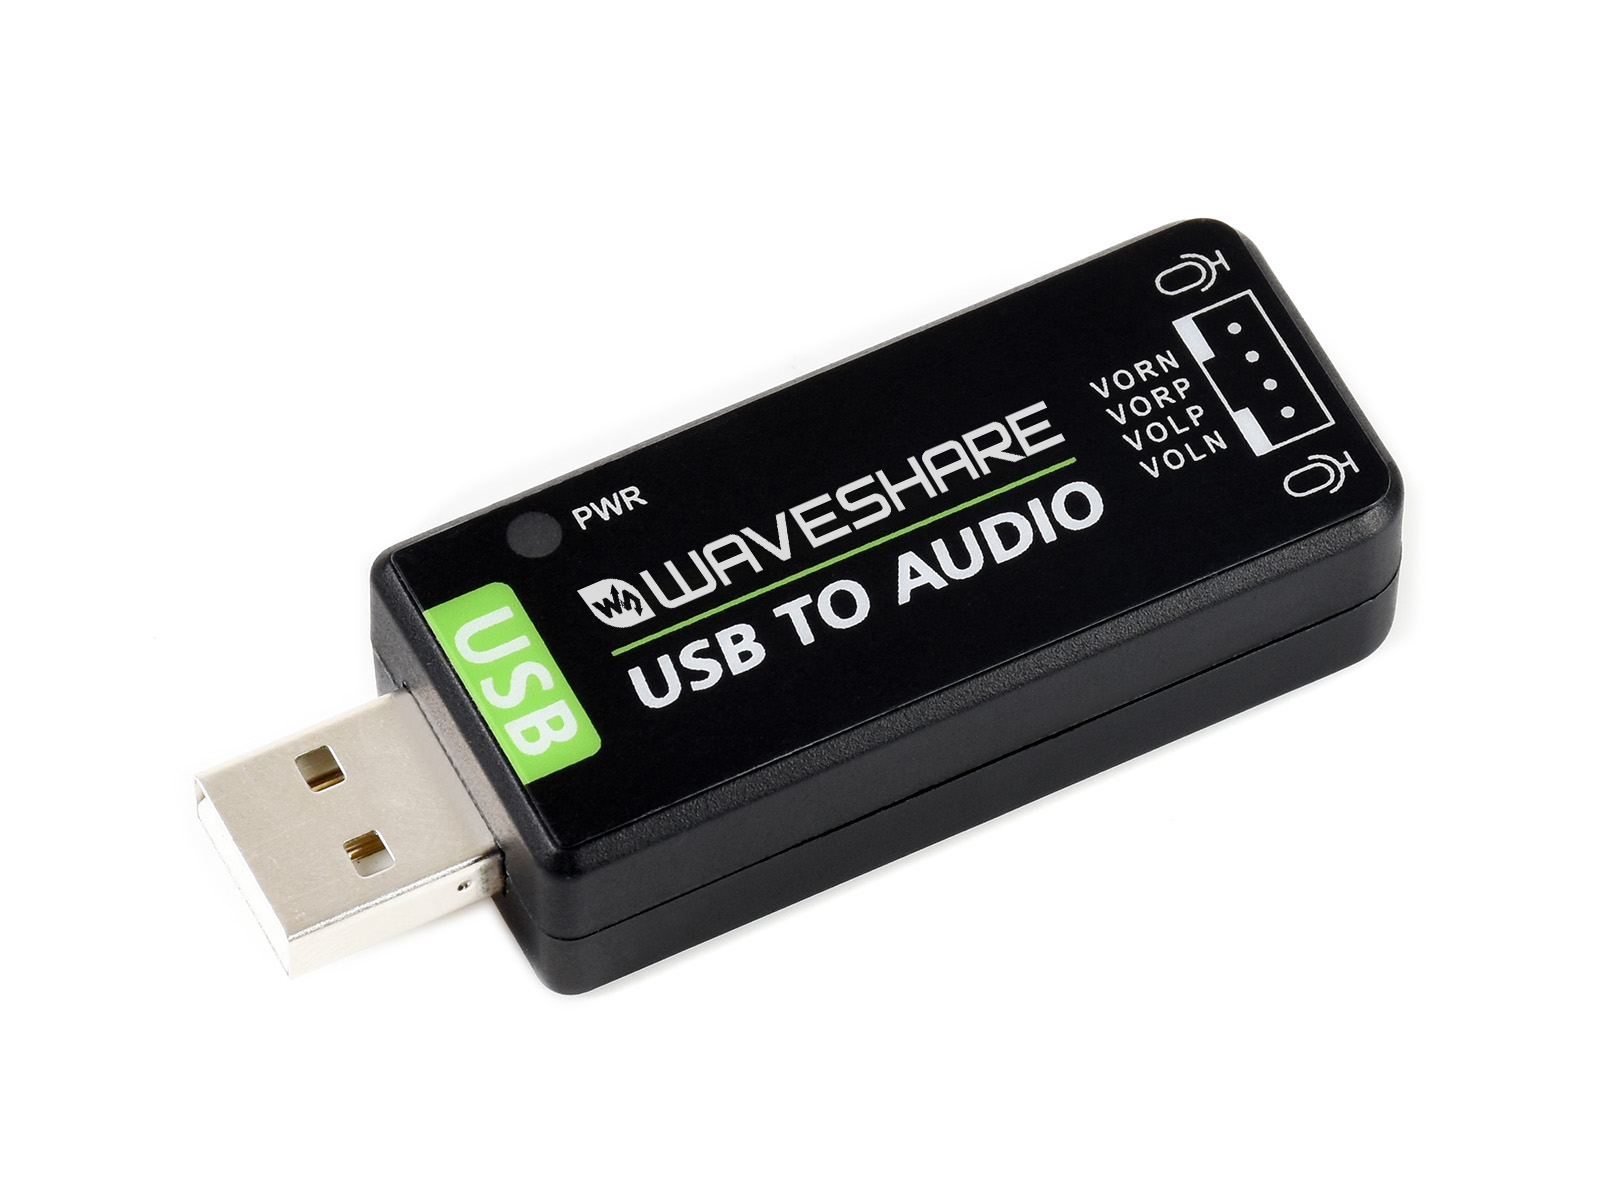 USB转音频模块免驱声卡 适用于树莓派/Jetson Nano/VisionFive2外接音频转换器